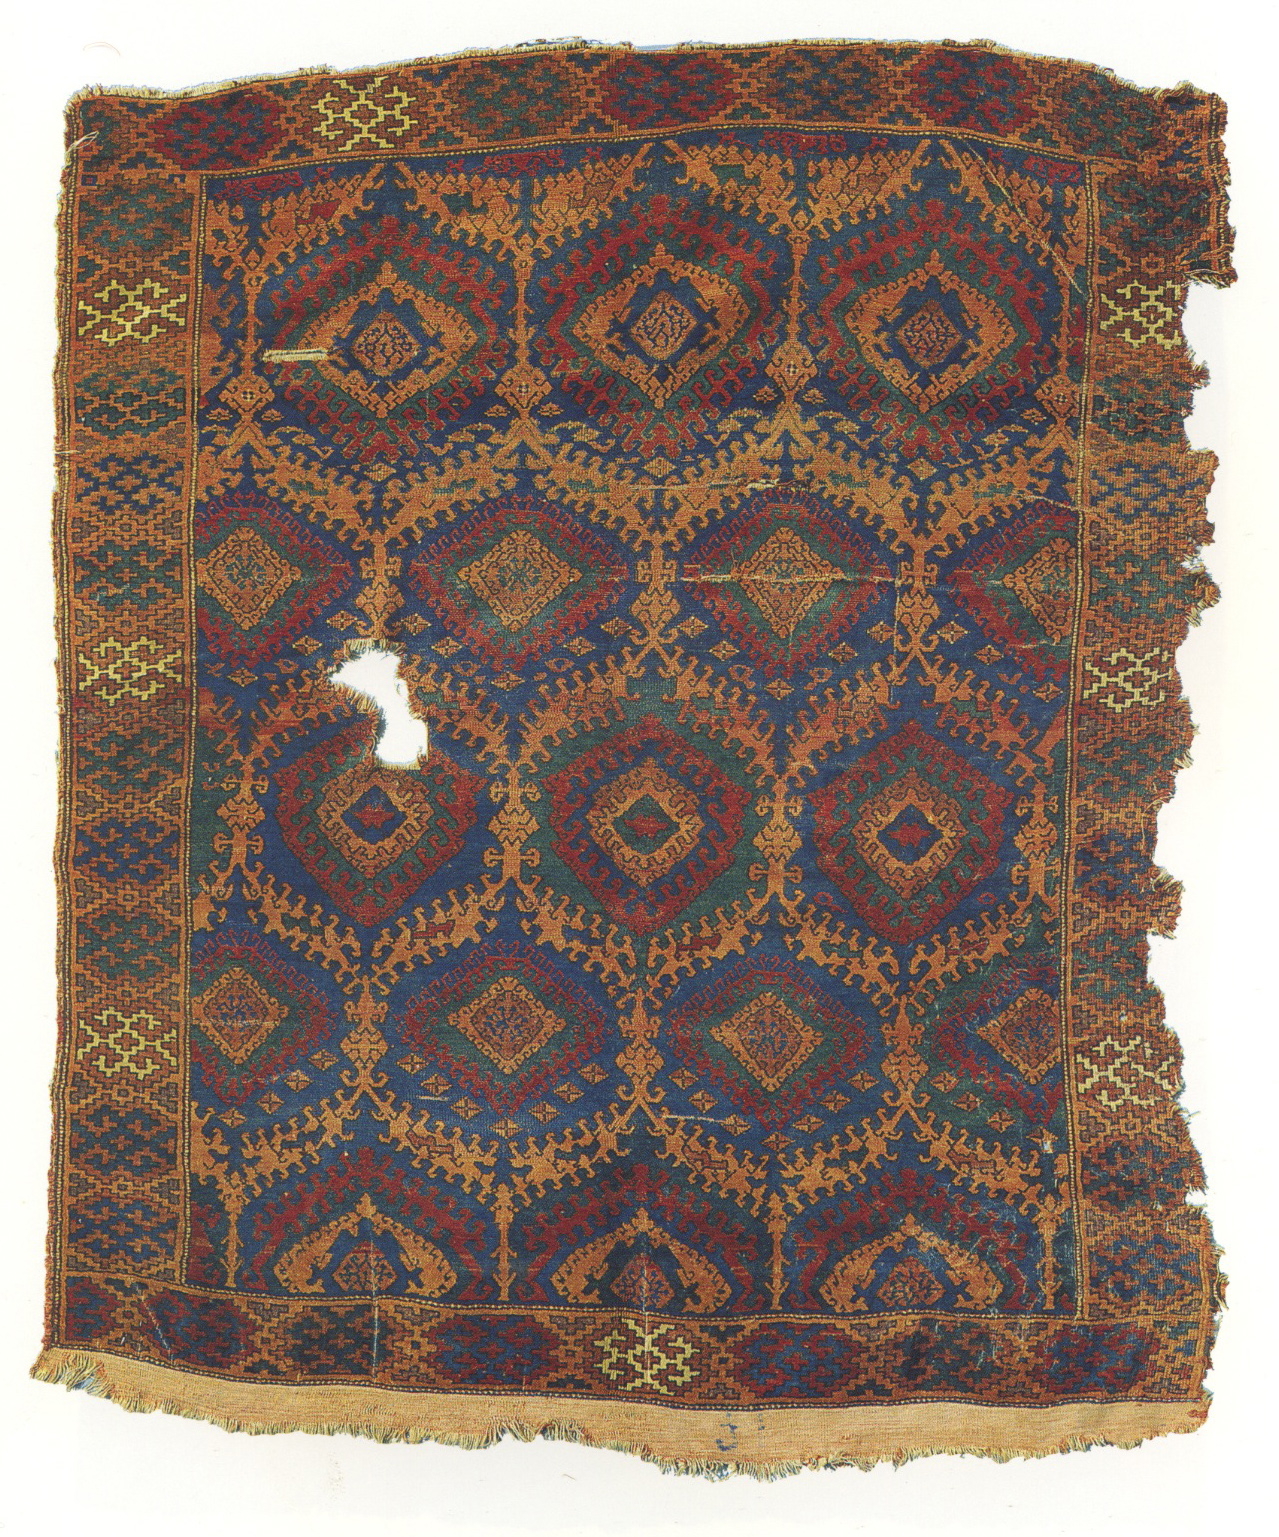 Early East Anatolian carpet, Sarkisla, Sivas, early 17th century